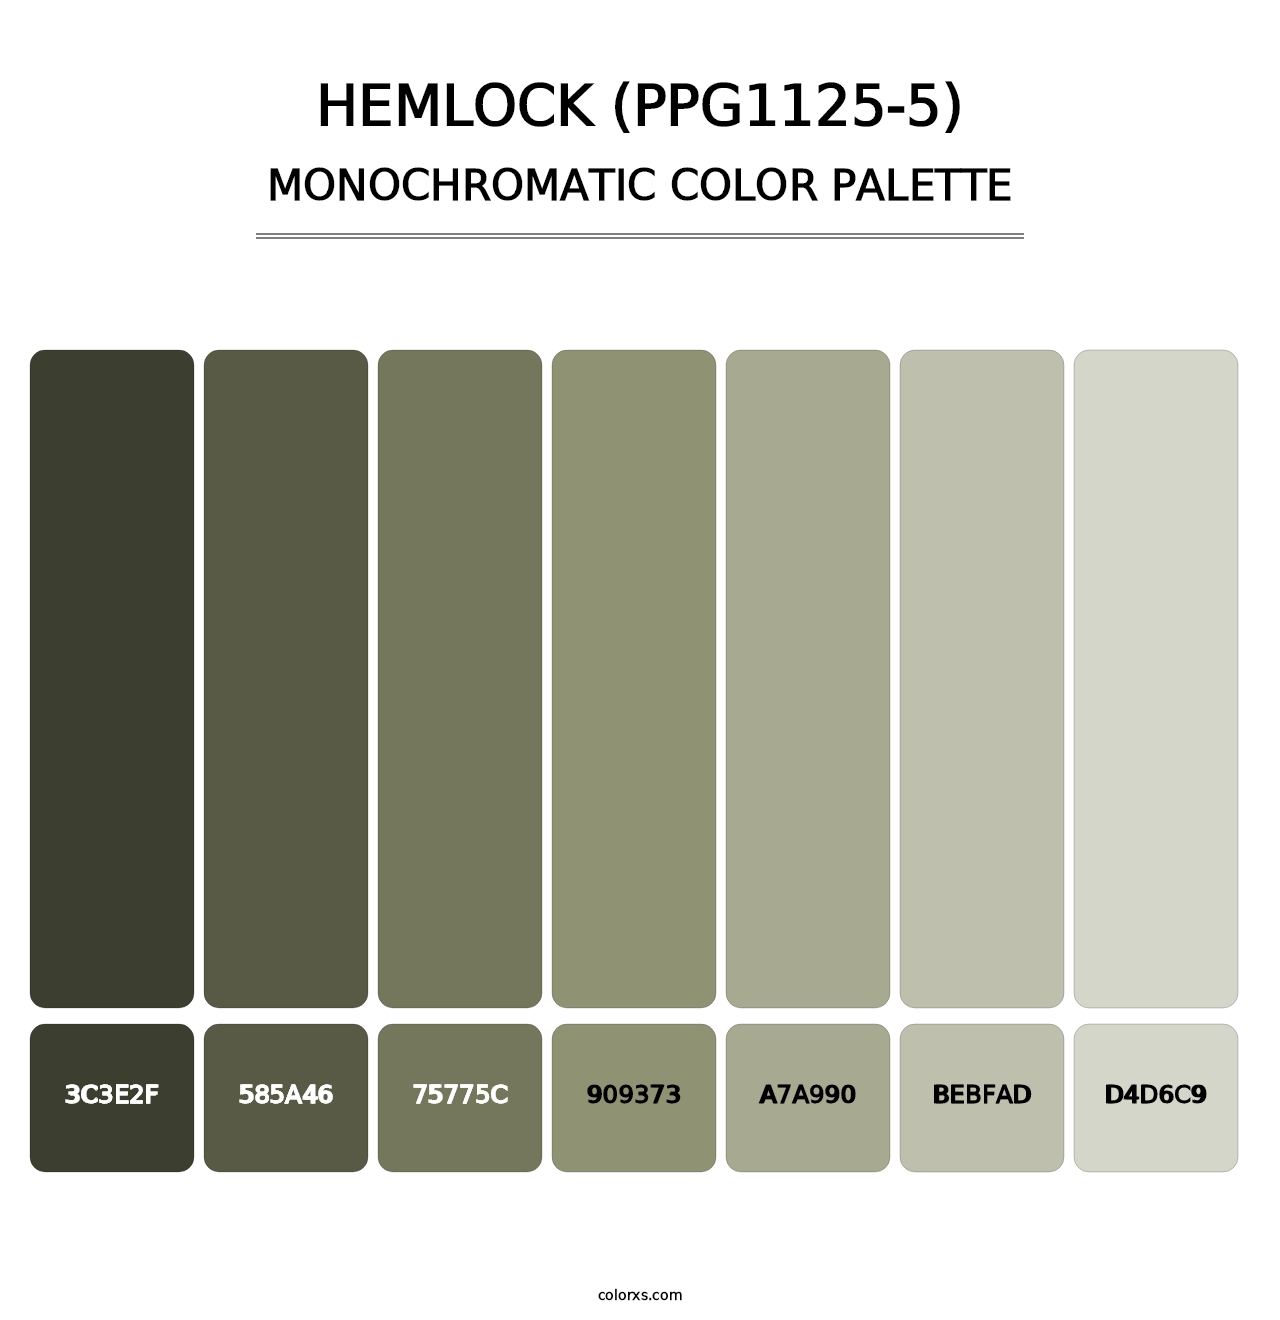 Hemlock (PPG1125-5) - Monochromatic Color Palette